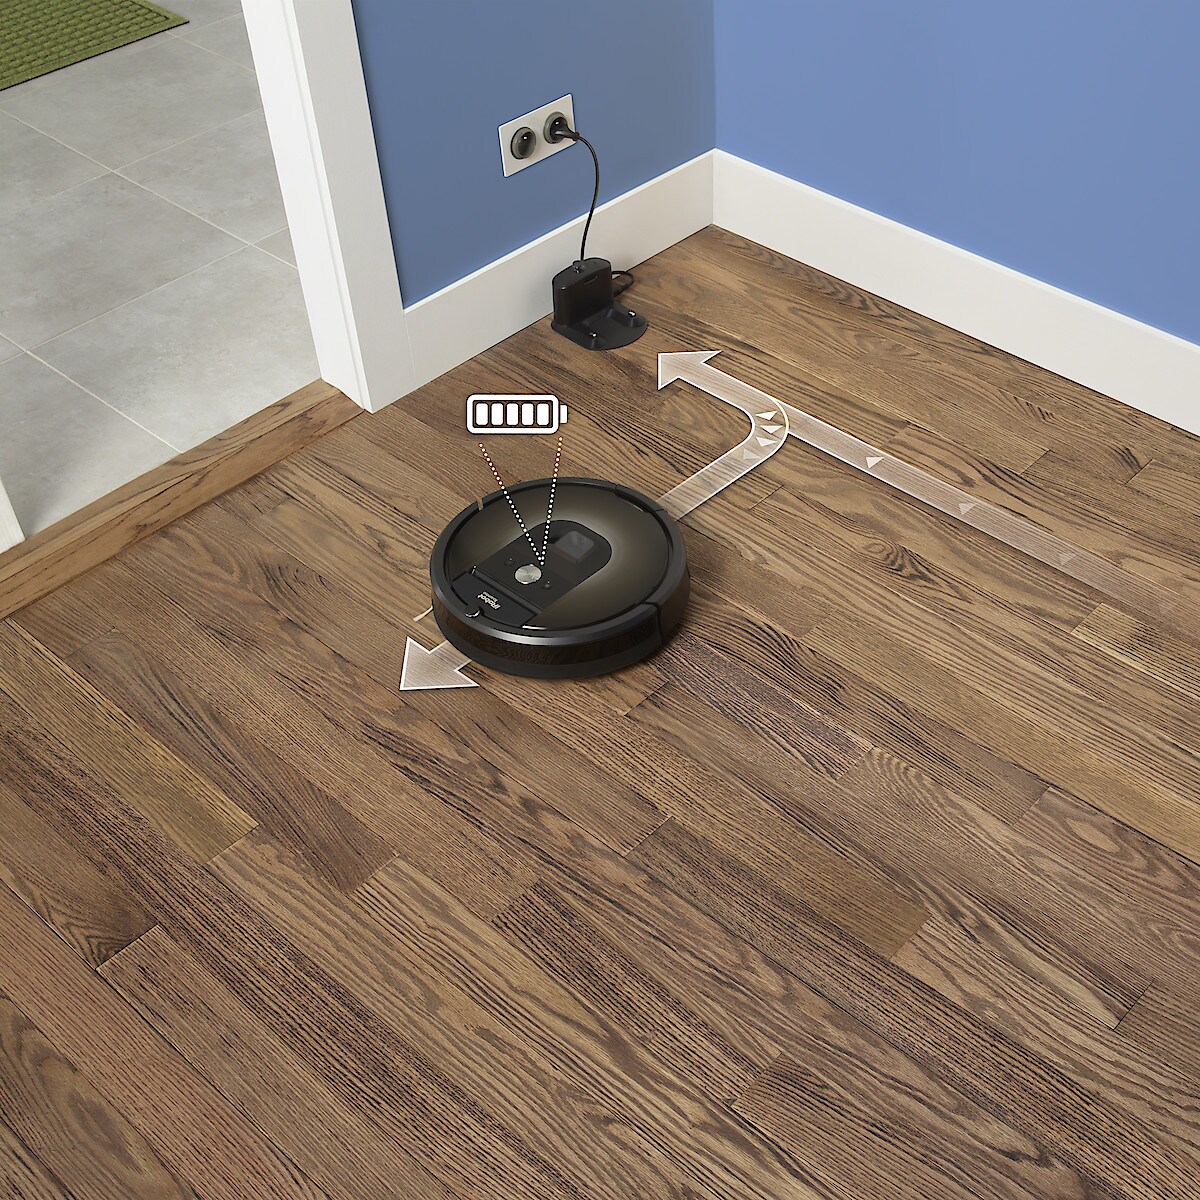 iRobot Roomba 980 robotstøvsuger